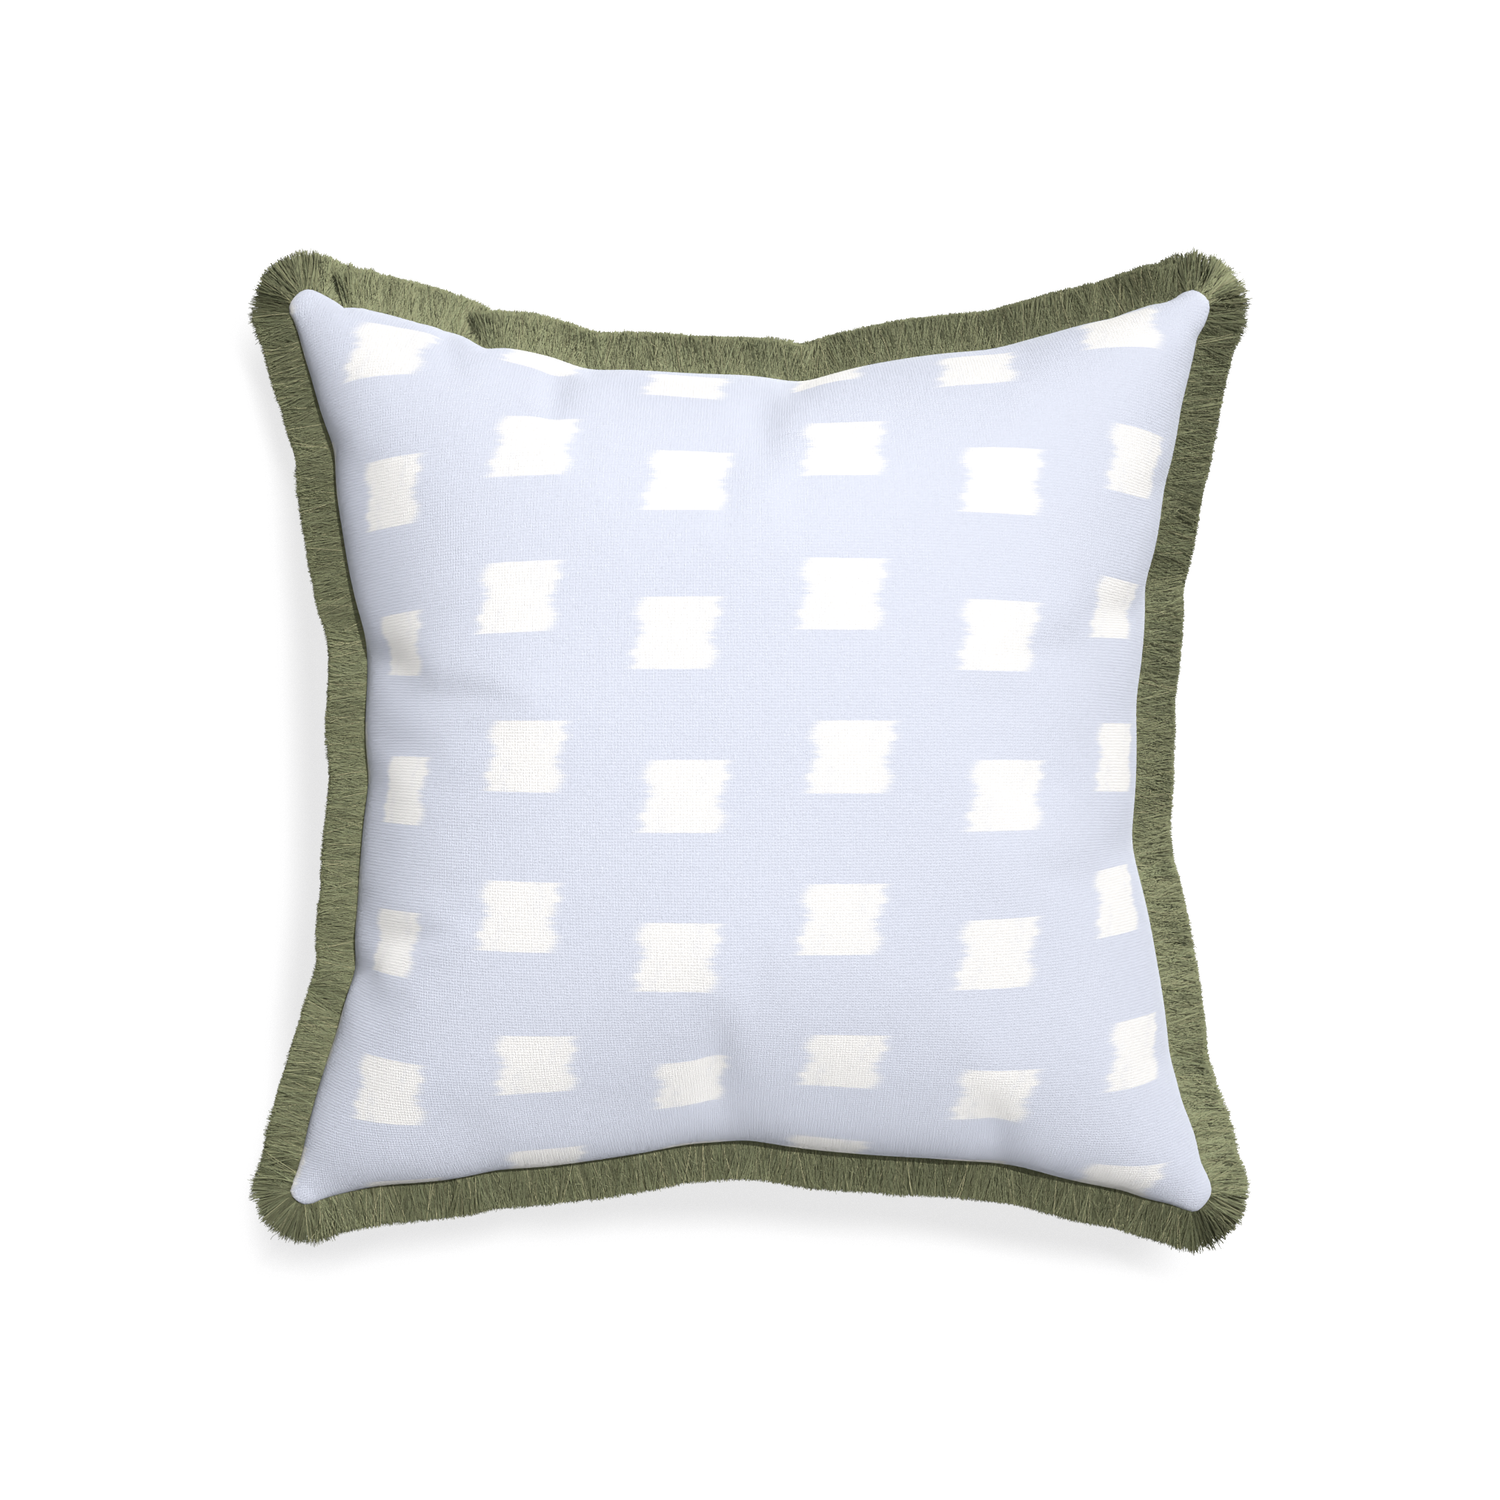 20-square denton custom pillow with sage fringe on white background